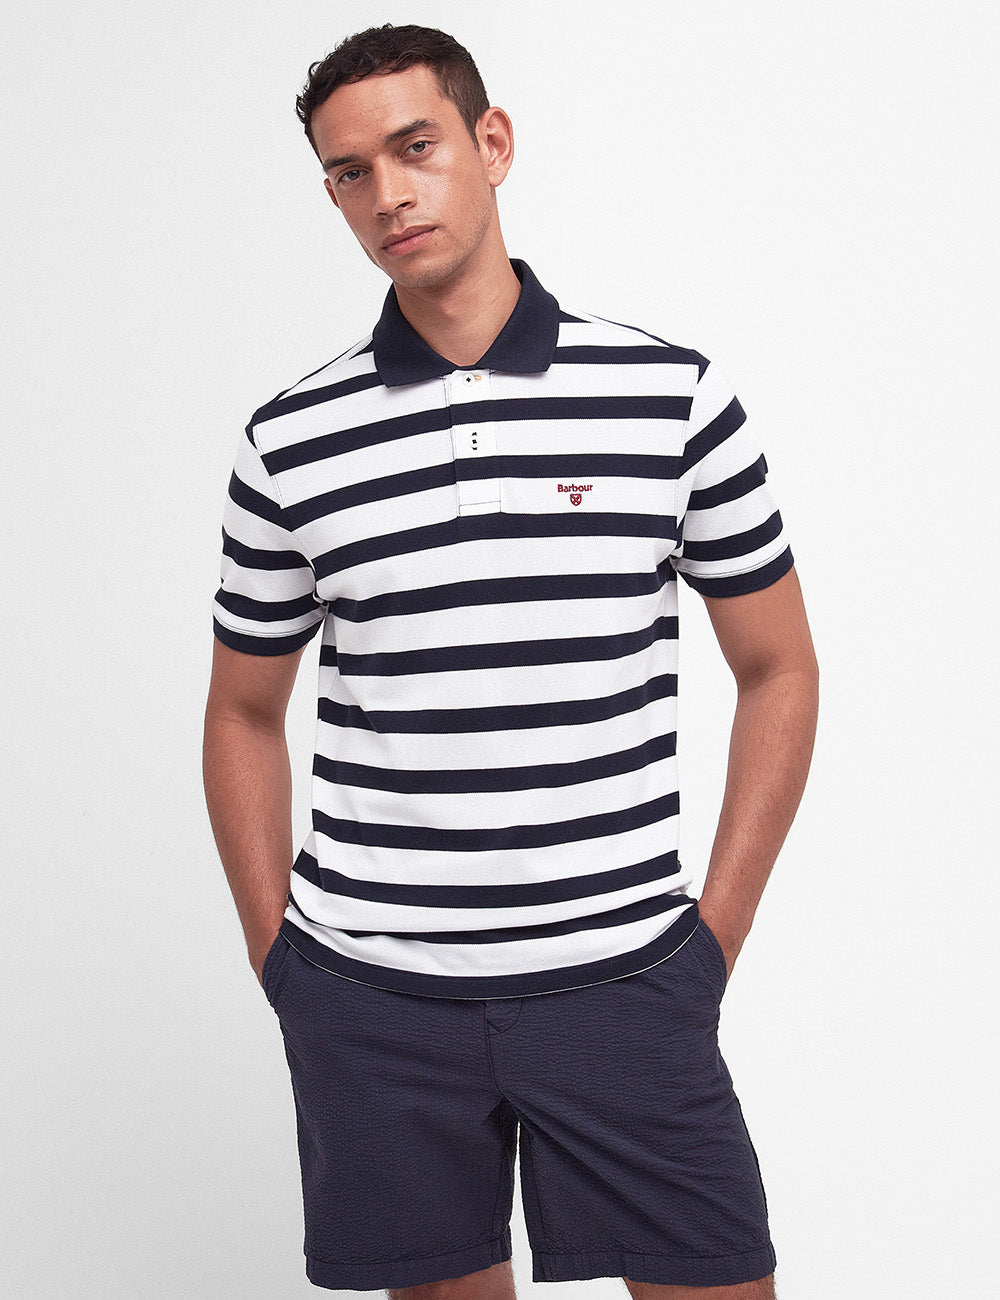 Barbour Stripe Sports Polo Shirt - Navy